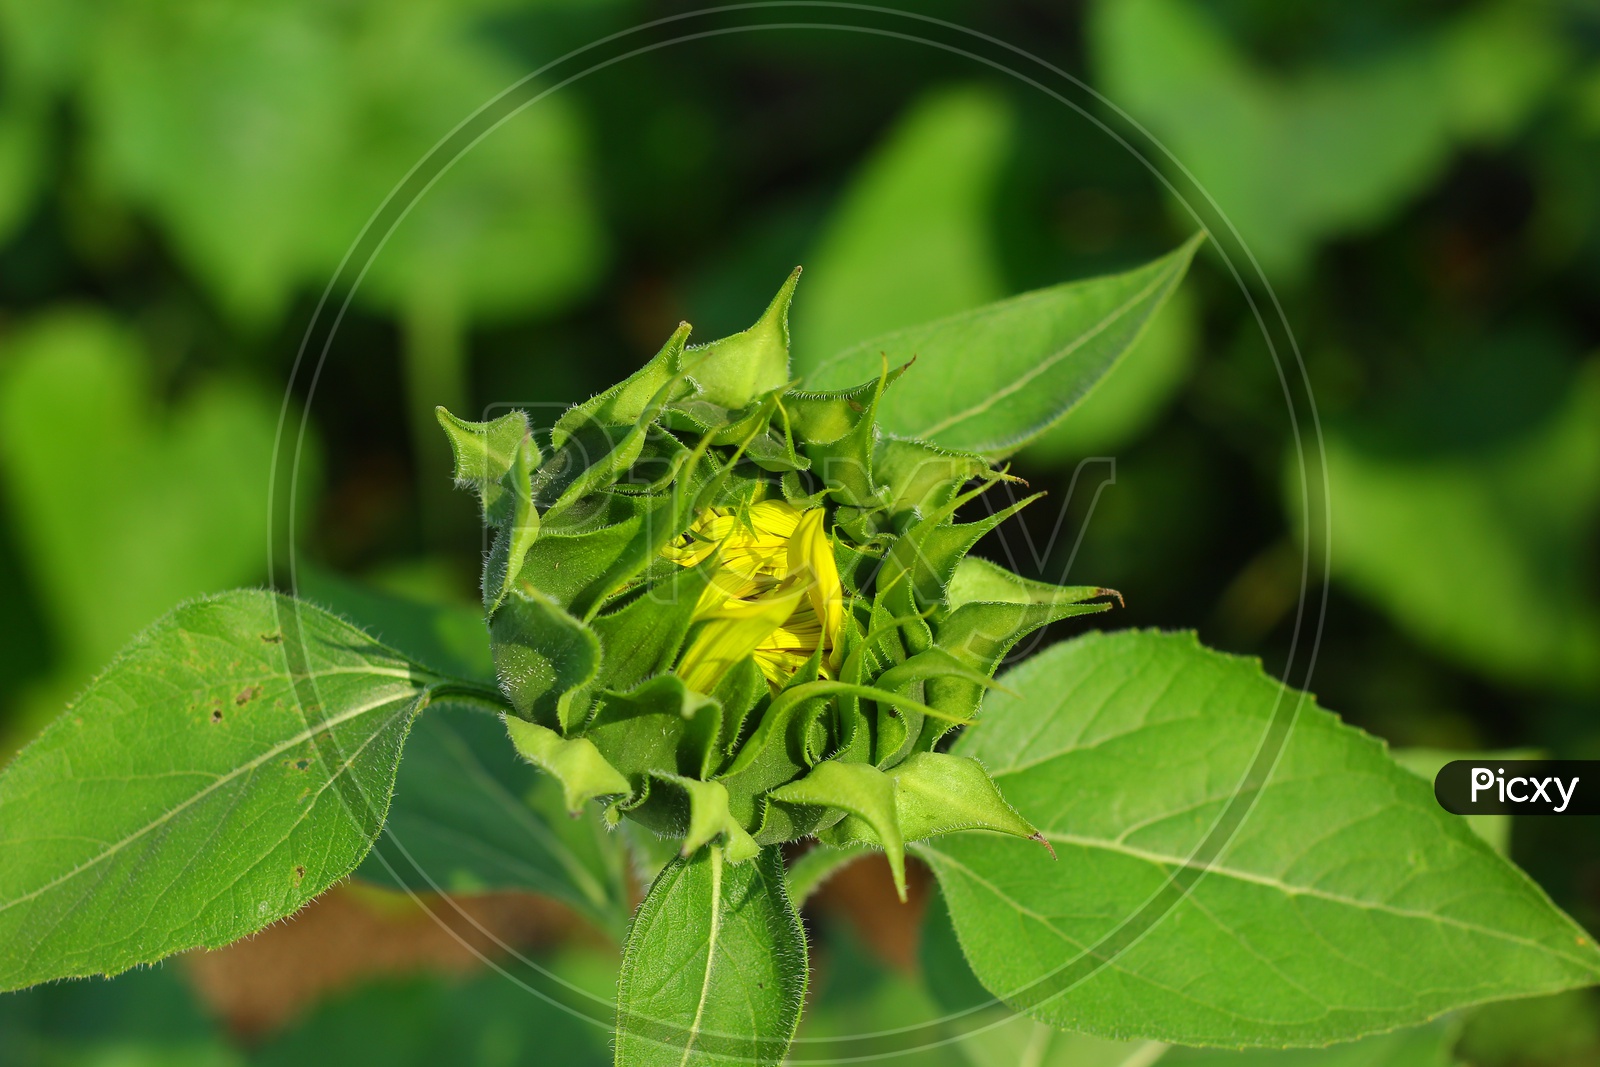 A Blooming Sunflower Bud in a Sunflower Farm  Closeup shots